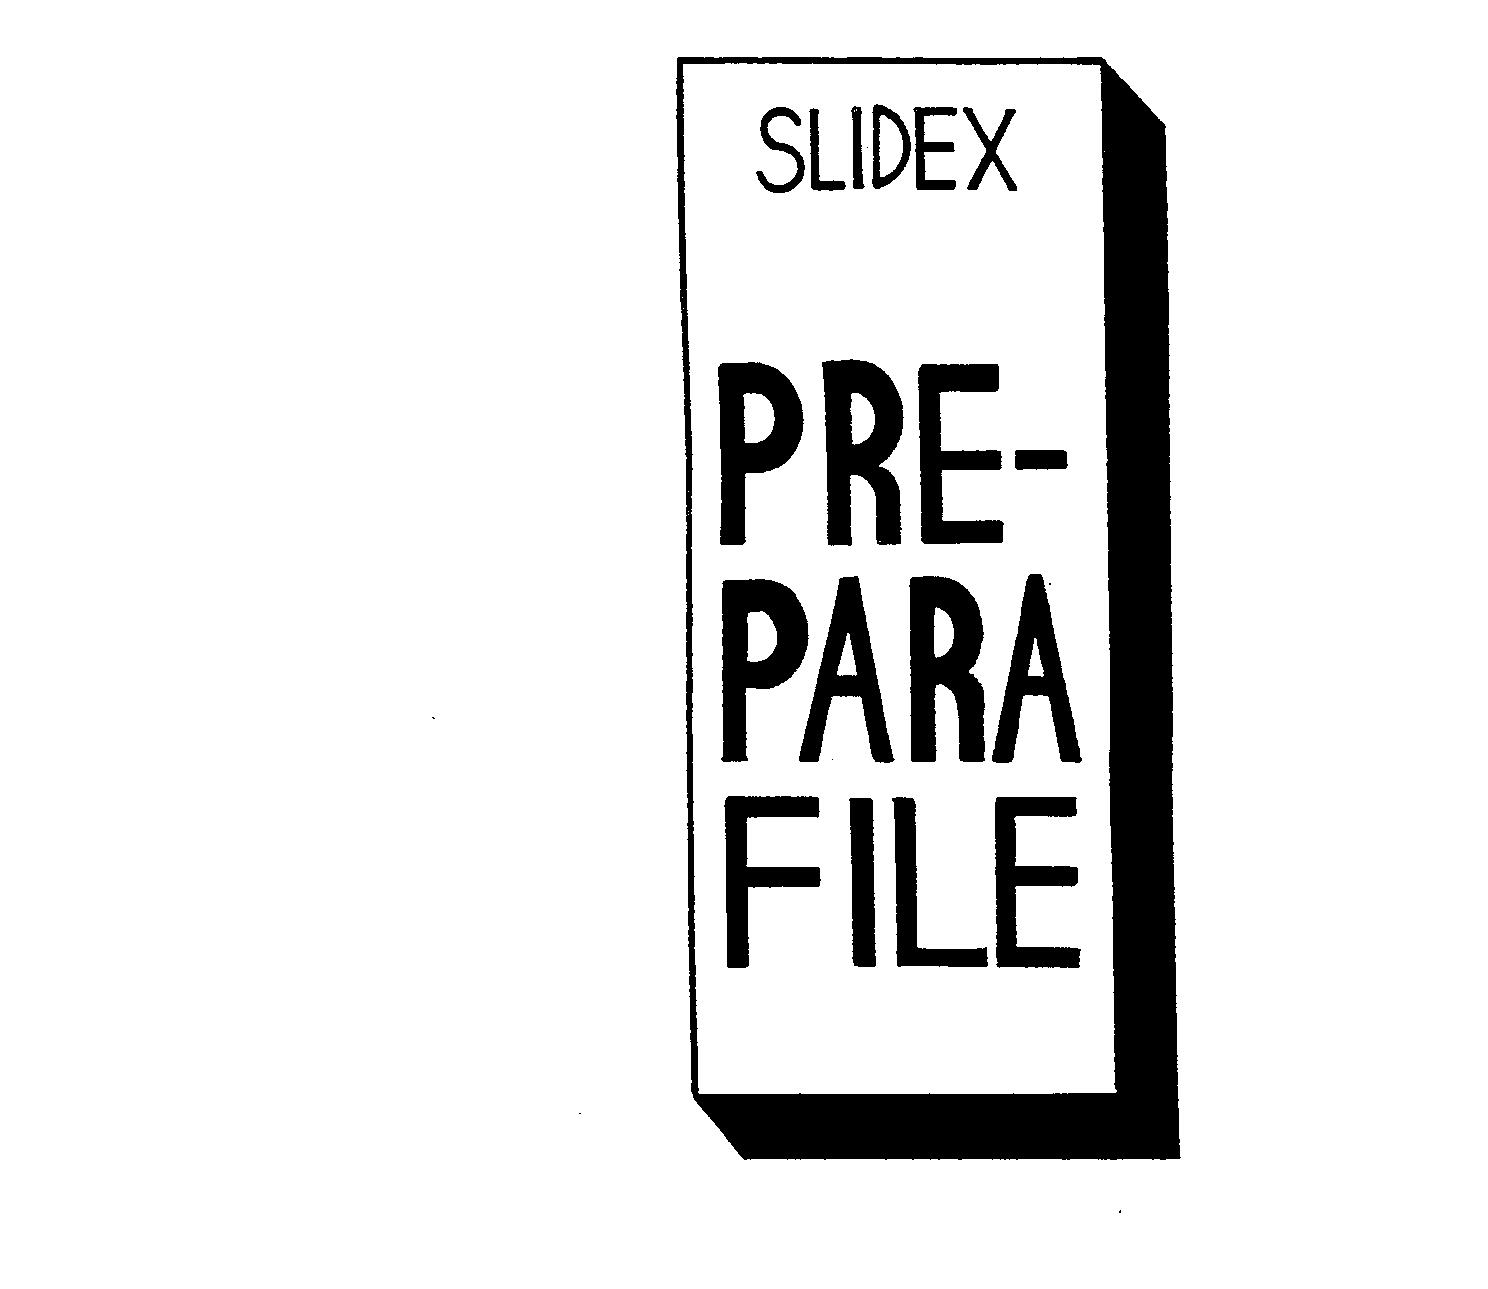  SLIDEX PRE-PARA FILE